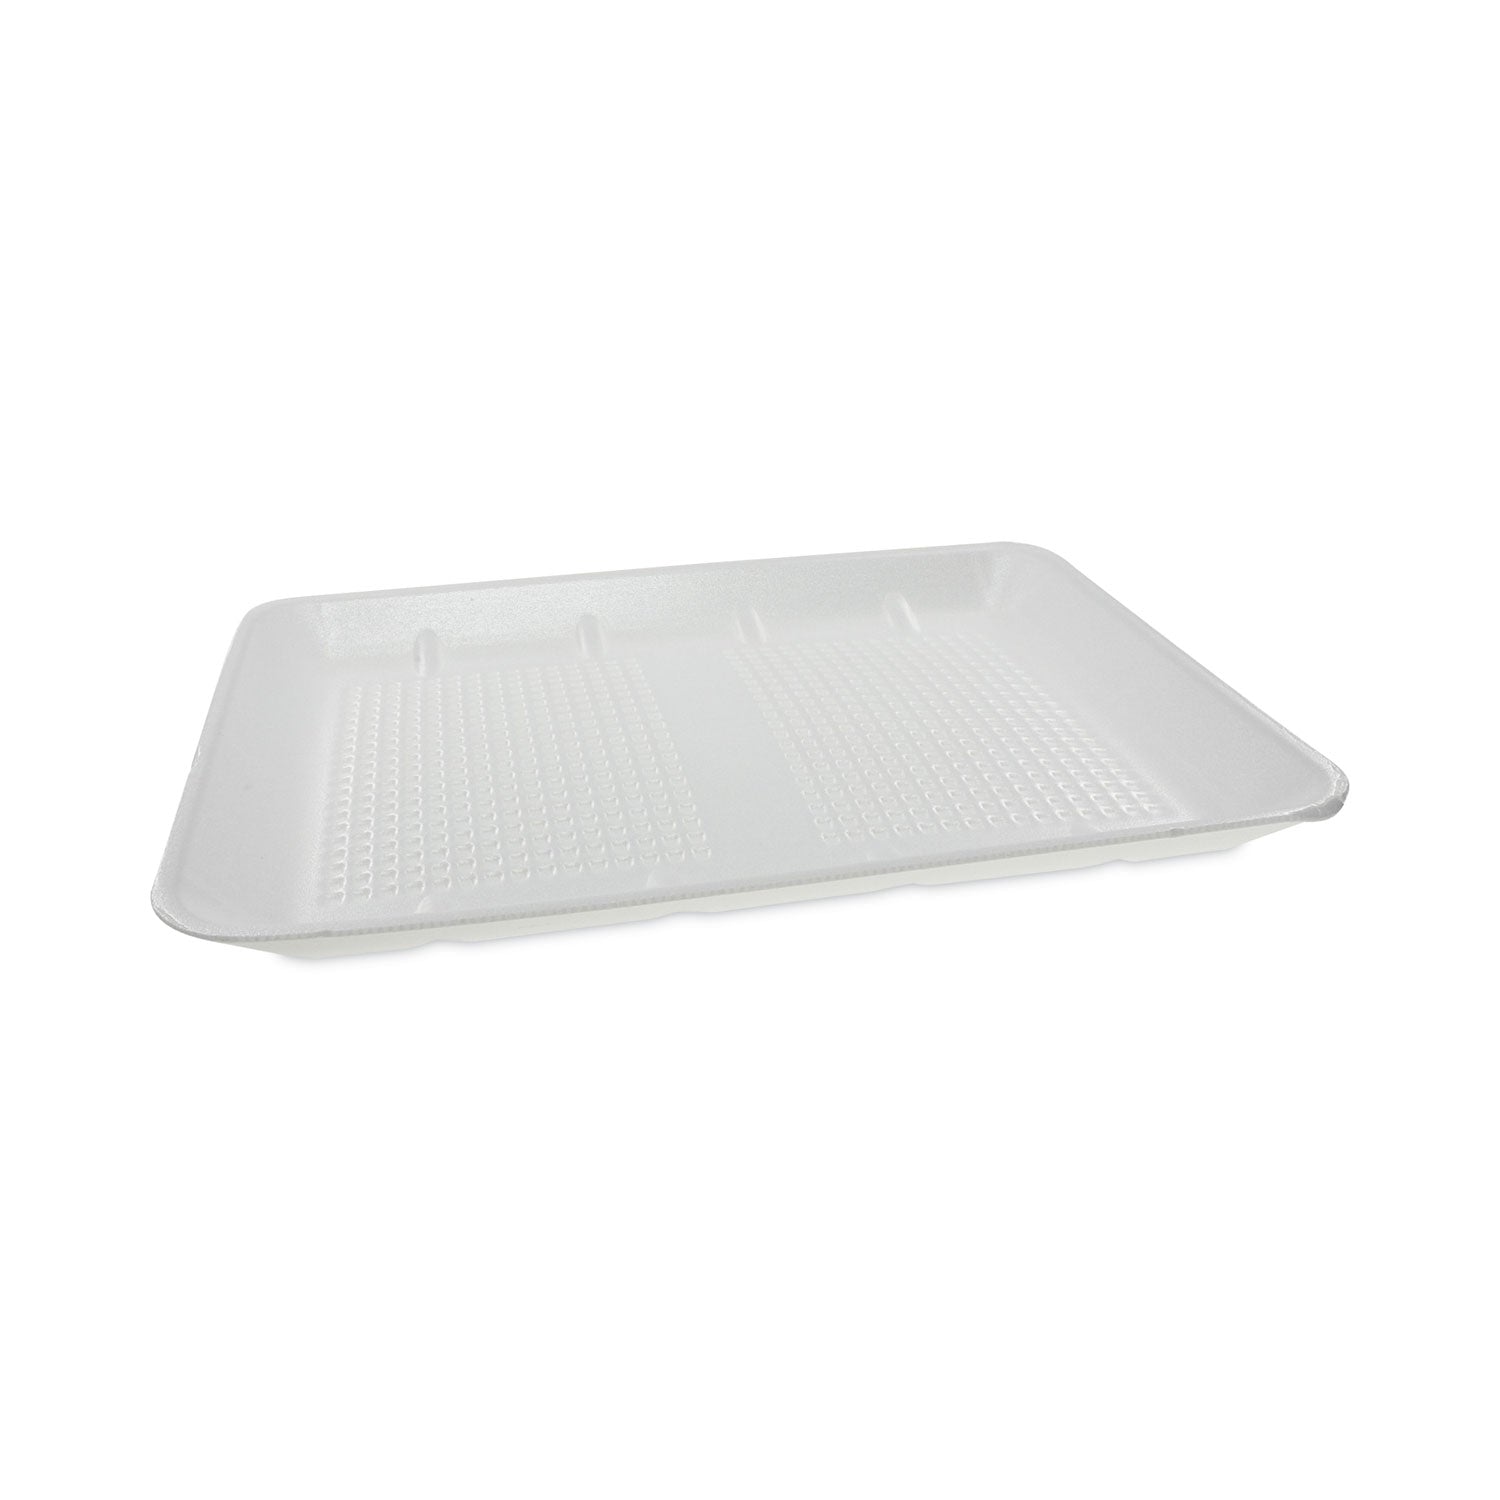 supermarket-tray-#1014-family-pack-tray-1388-x-988-x-1-white-foam-100-carton_pcthtf110140000 - 1